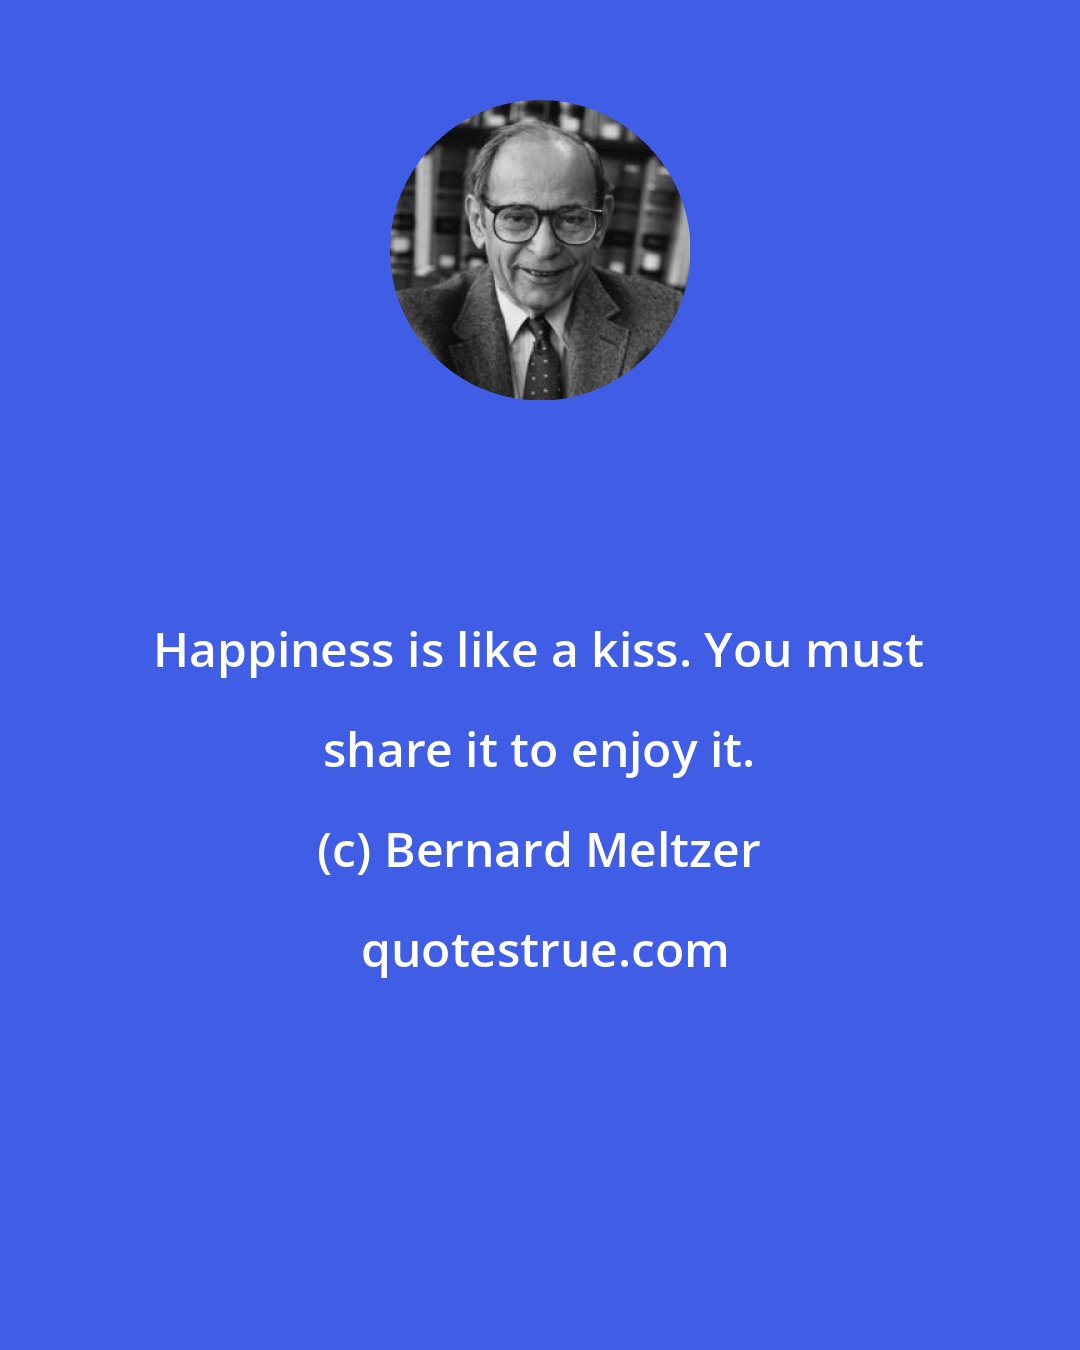 Bernard Meltzer: Happiness is like a kiss. You must share it to enjoy it.